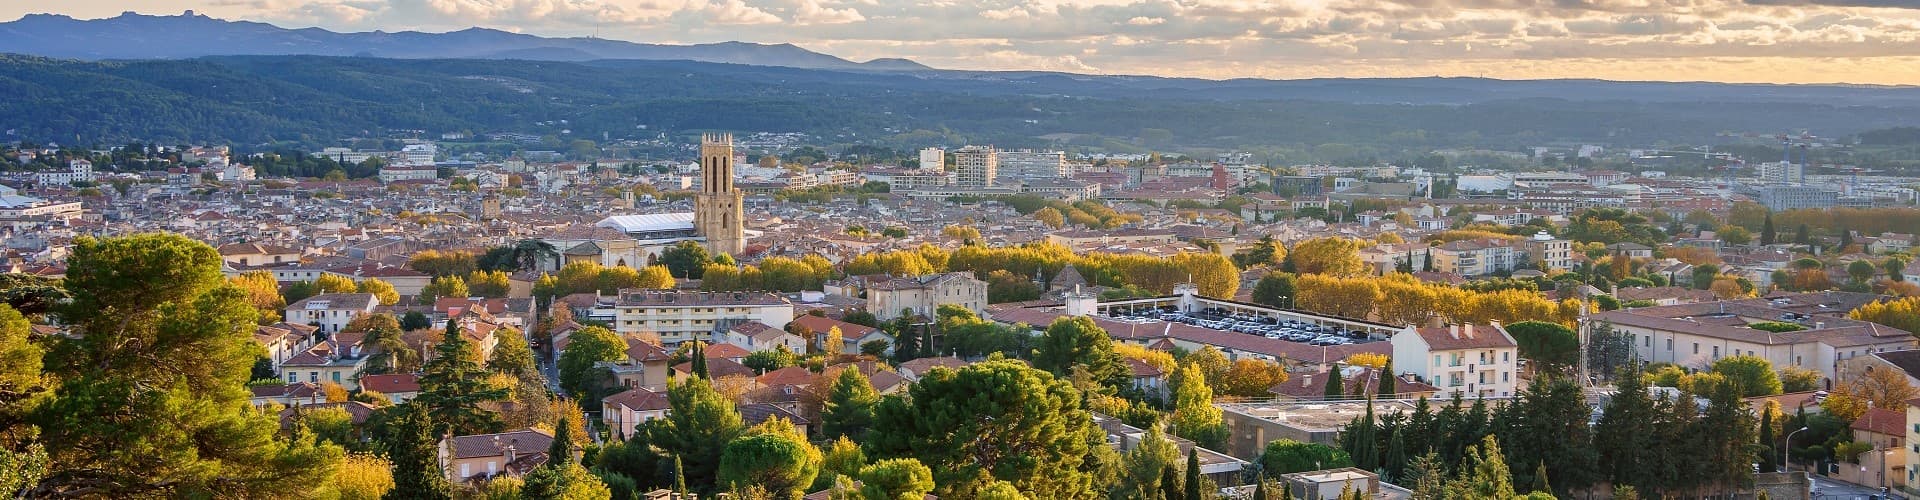 Aix-en-Provence Skyline